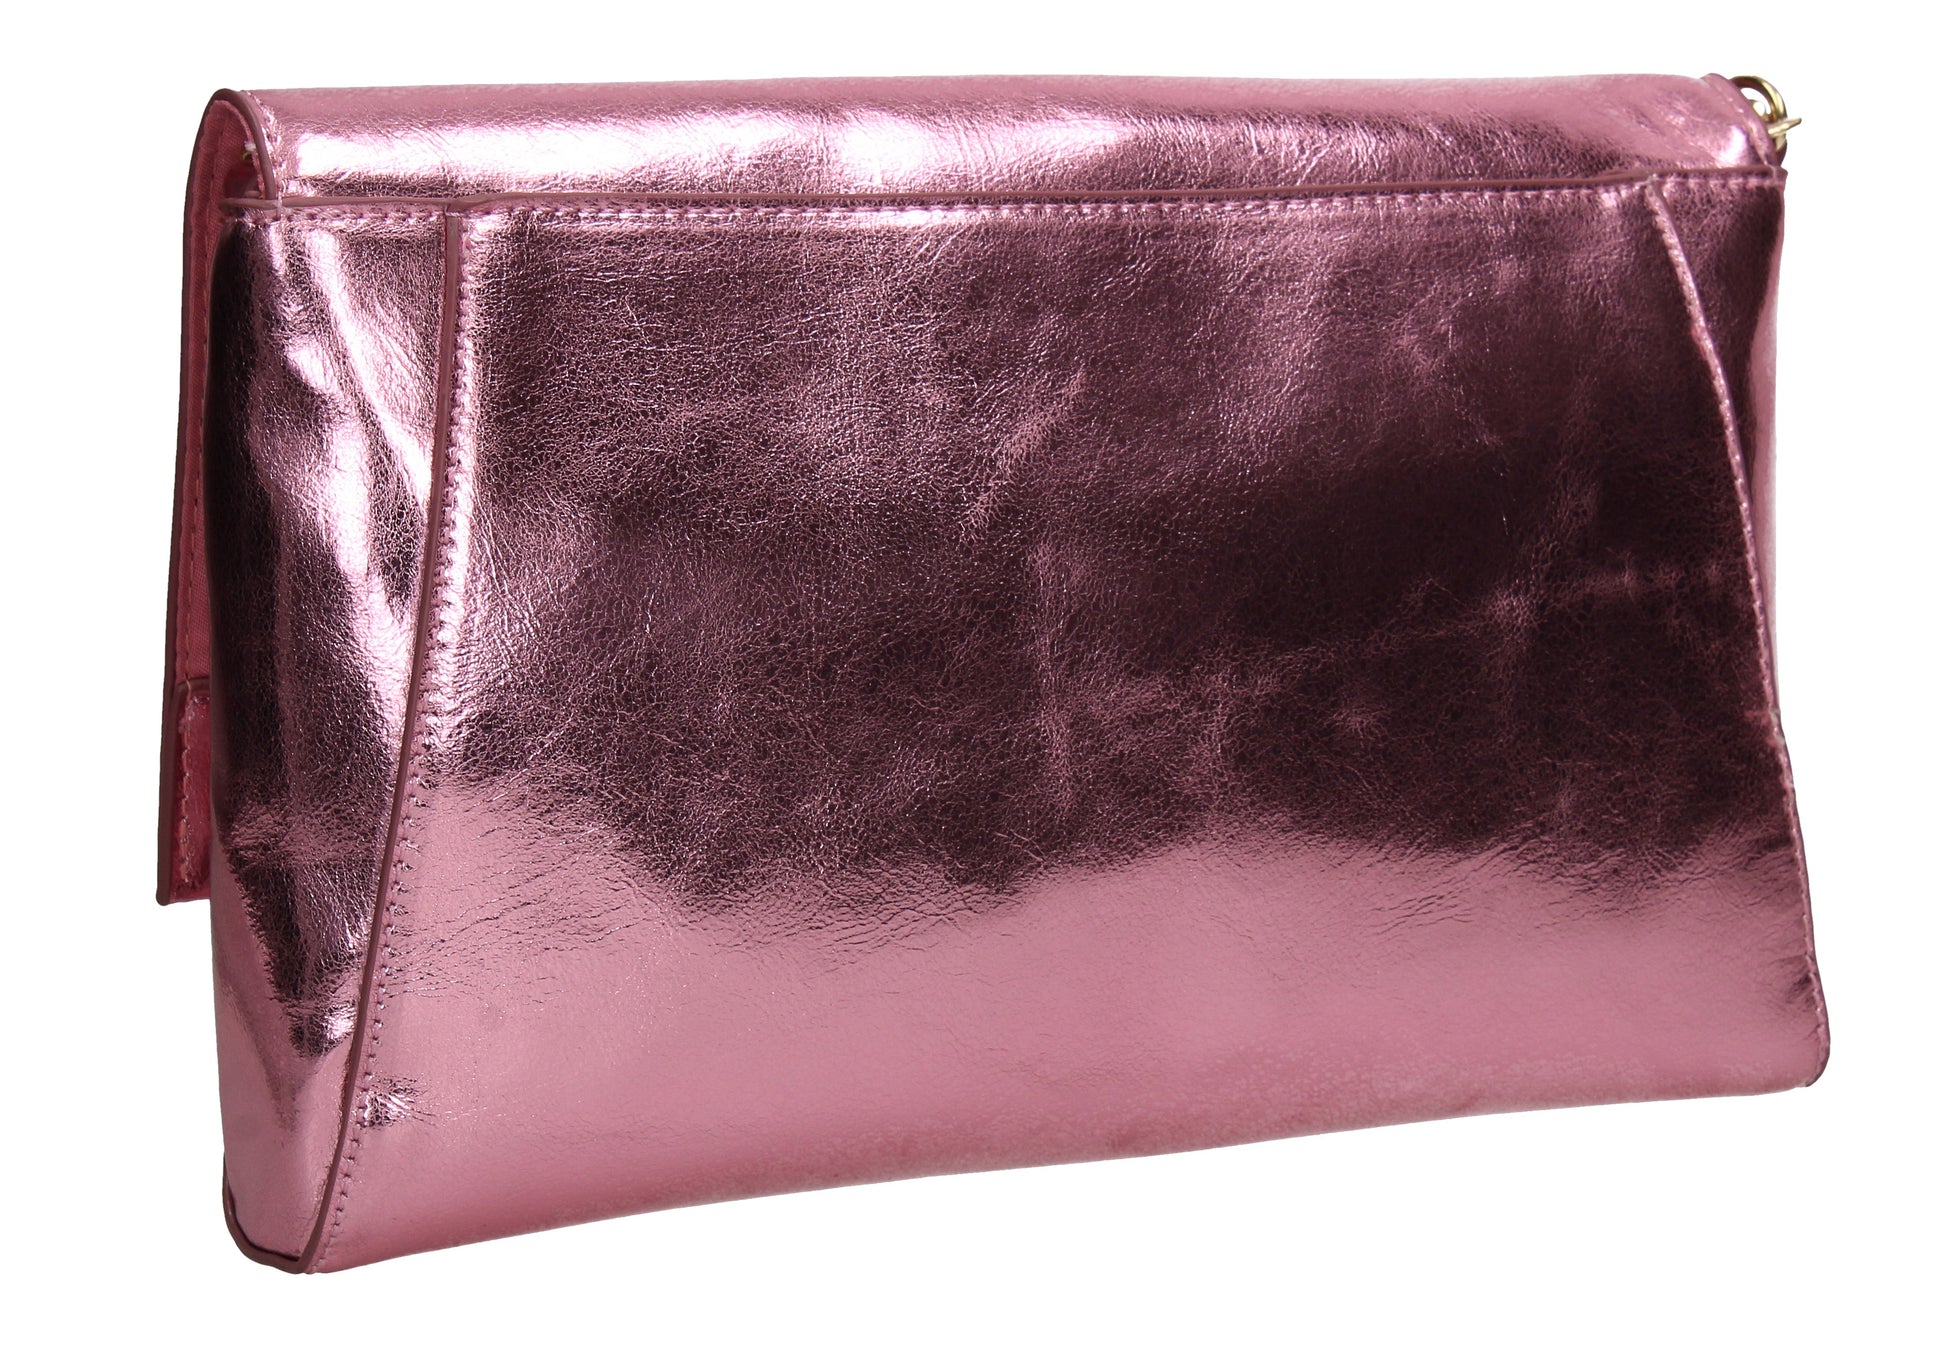 SWANKYSWANS Jenna Clutch Bag Pink Cute Cheap Clutch Bag For Weddings School and Work